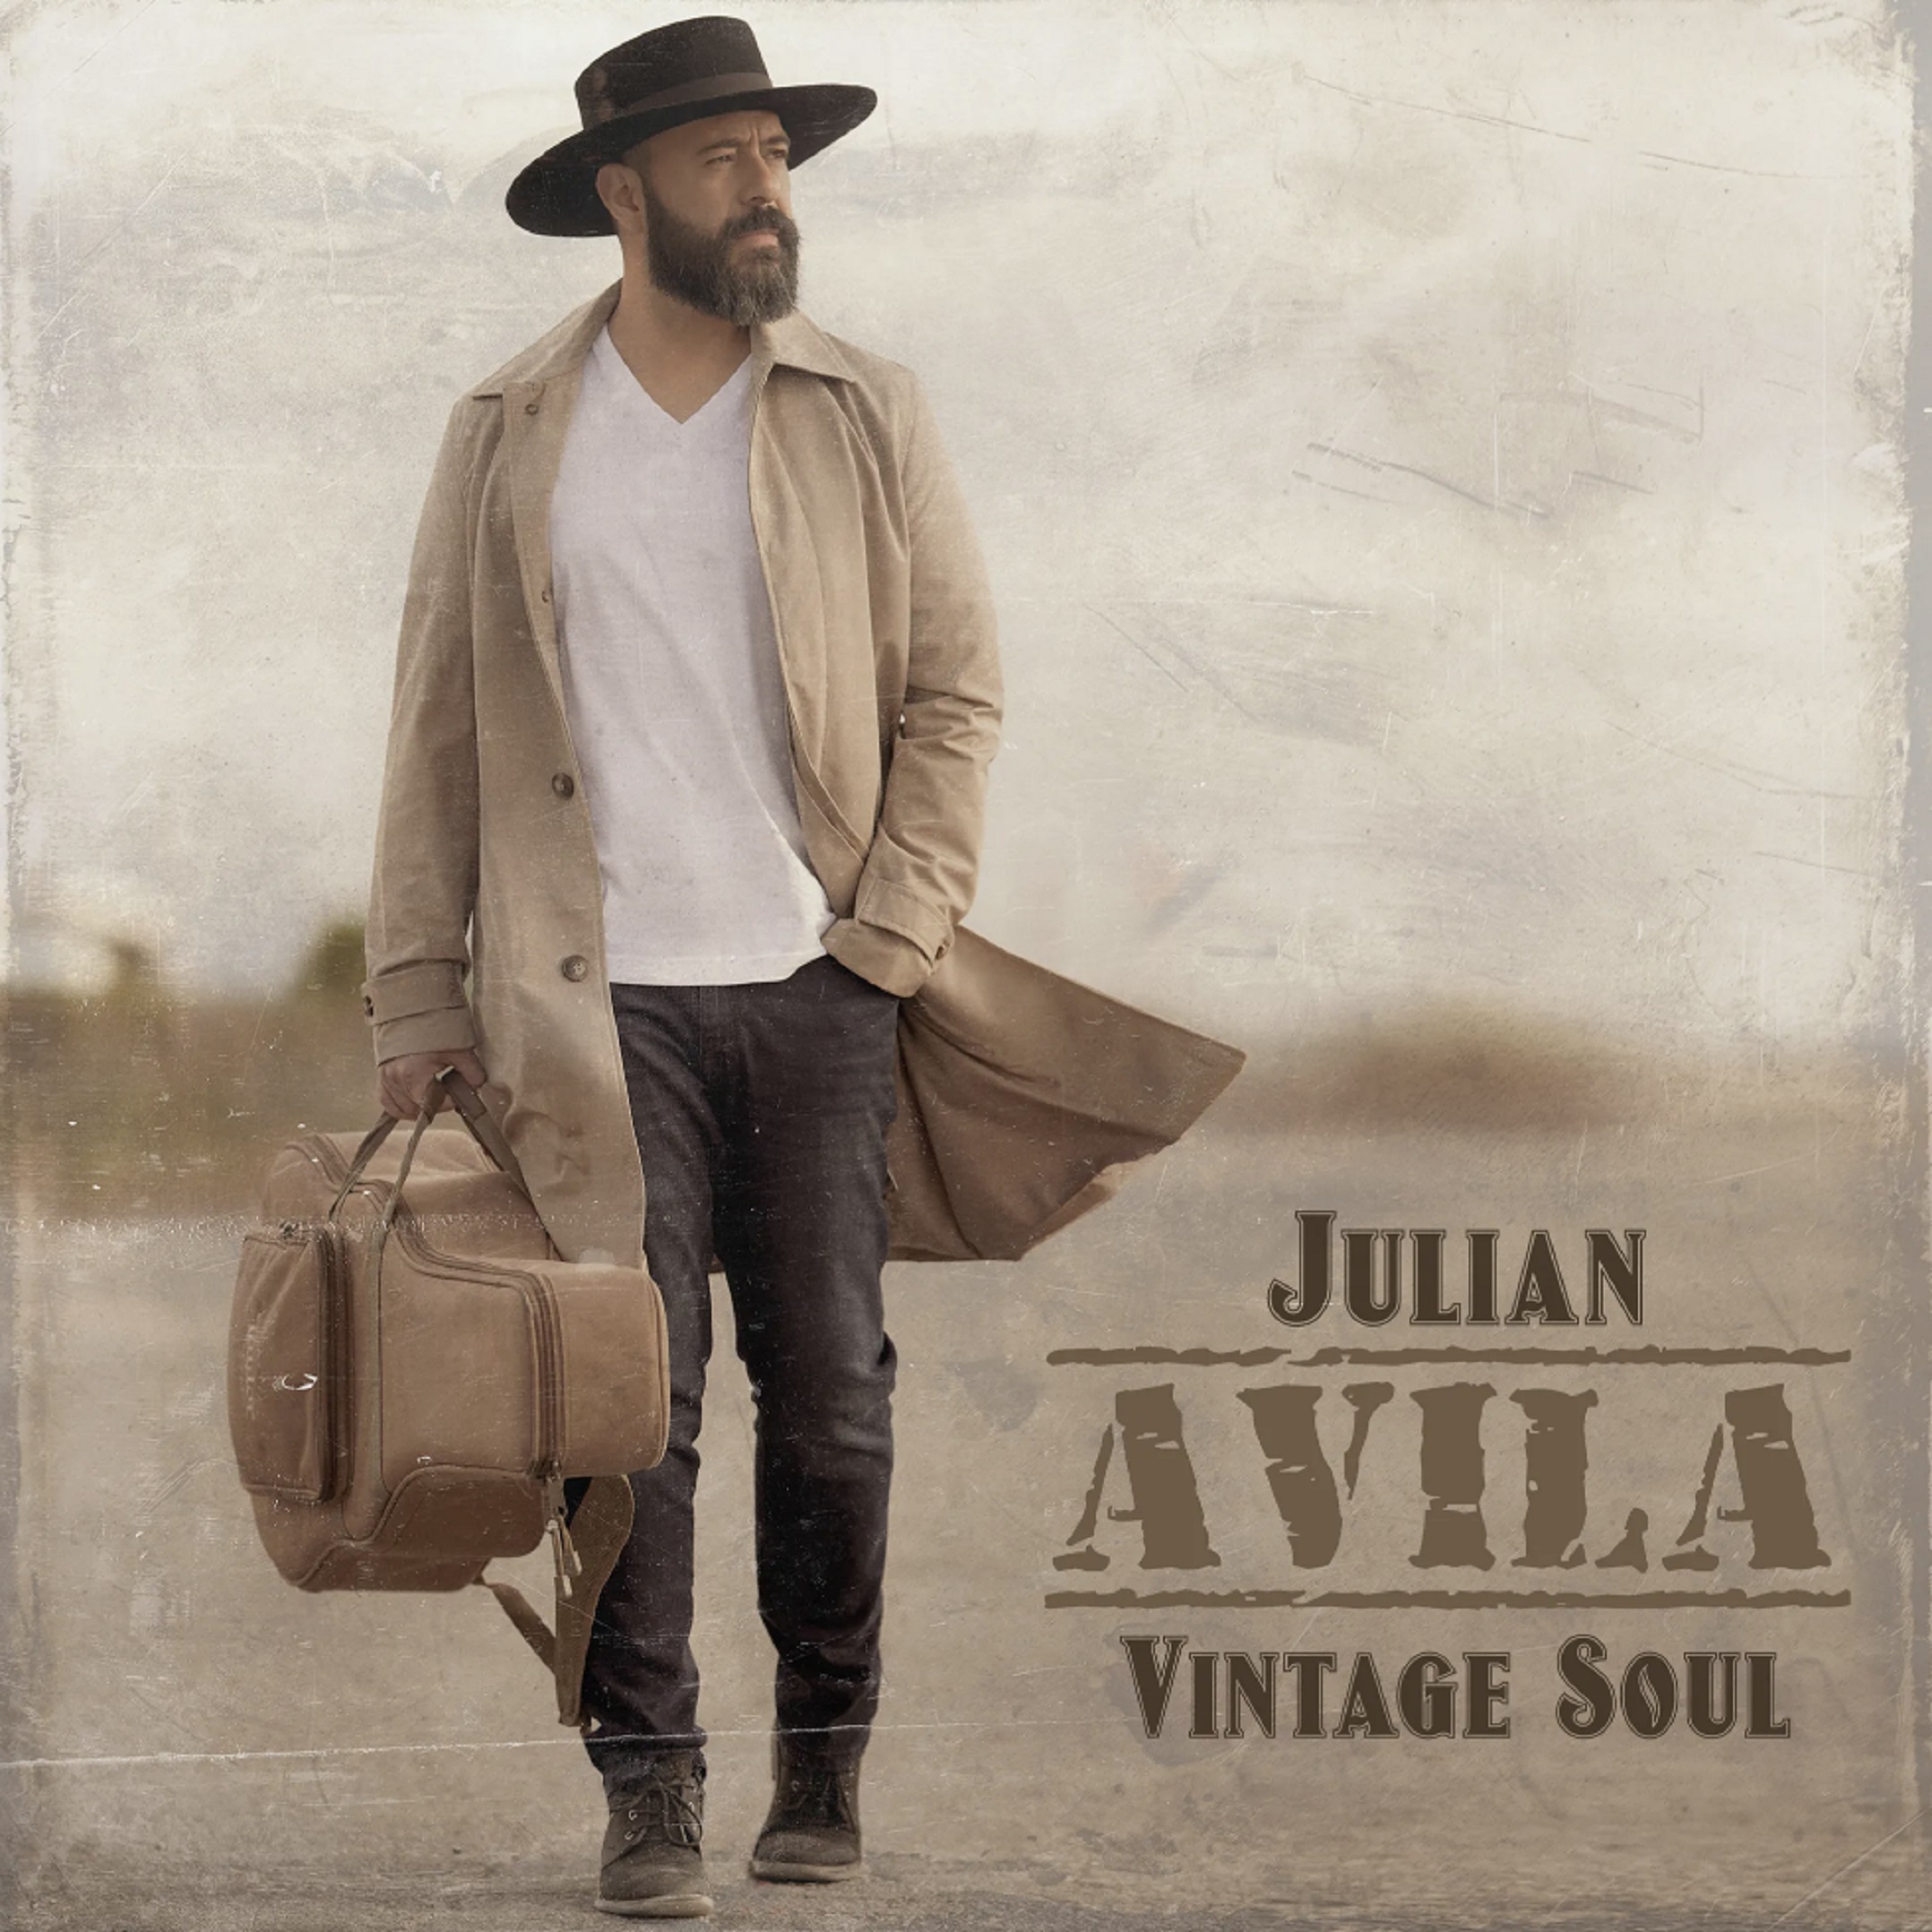 Julian Avila releases new recording "Vintage Soul"